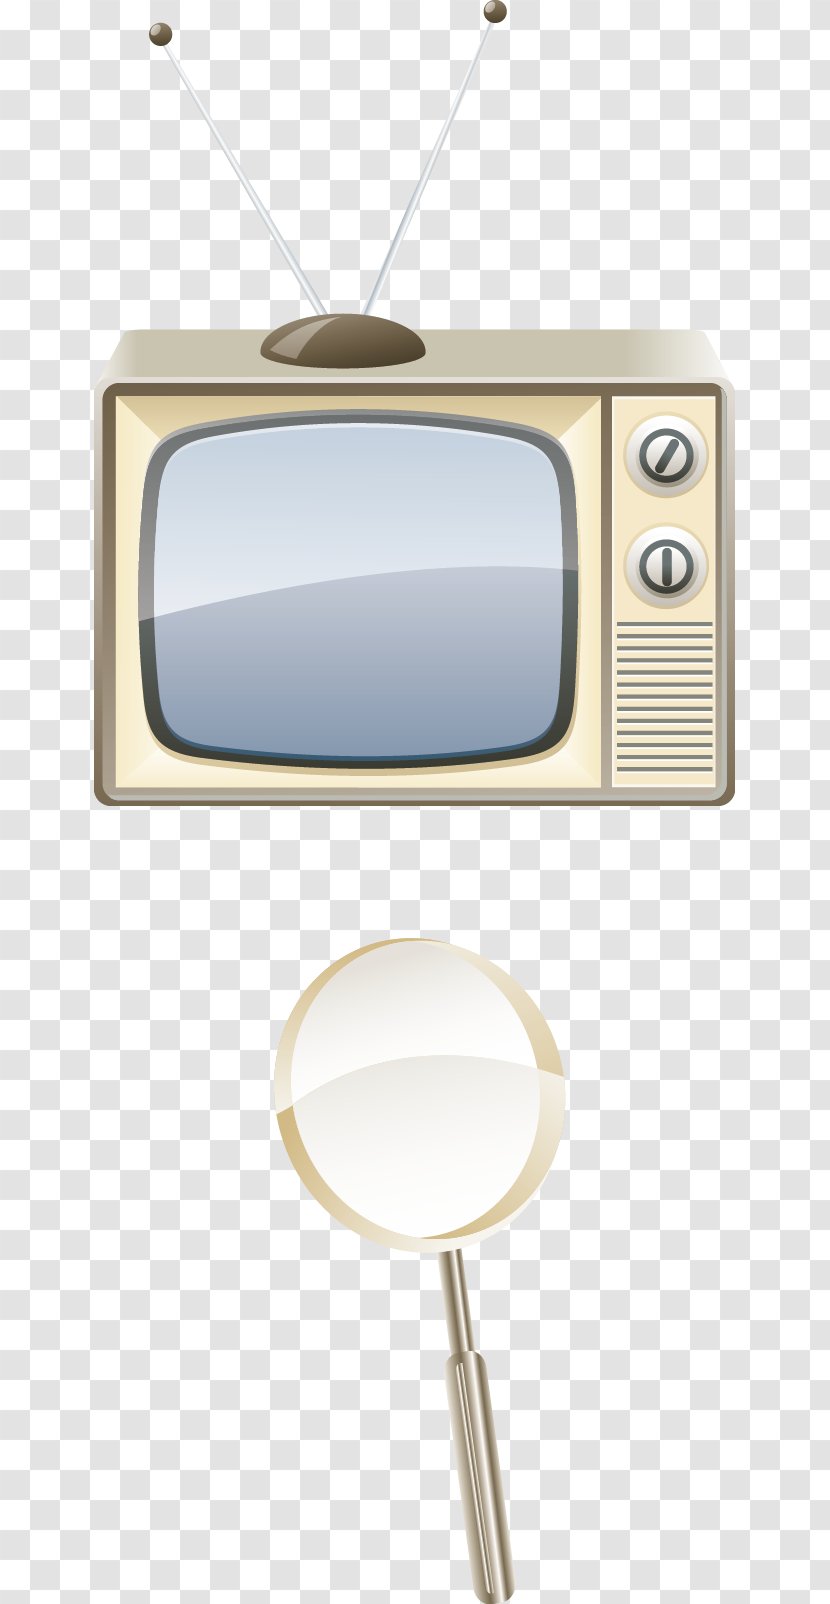 Television Set Cartoon - Freetoair - TV Magnifier Vector Material Transparent PNG